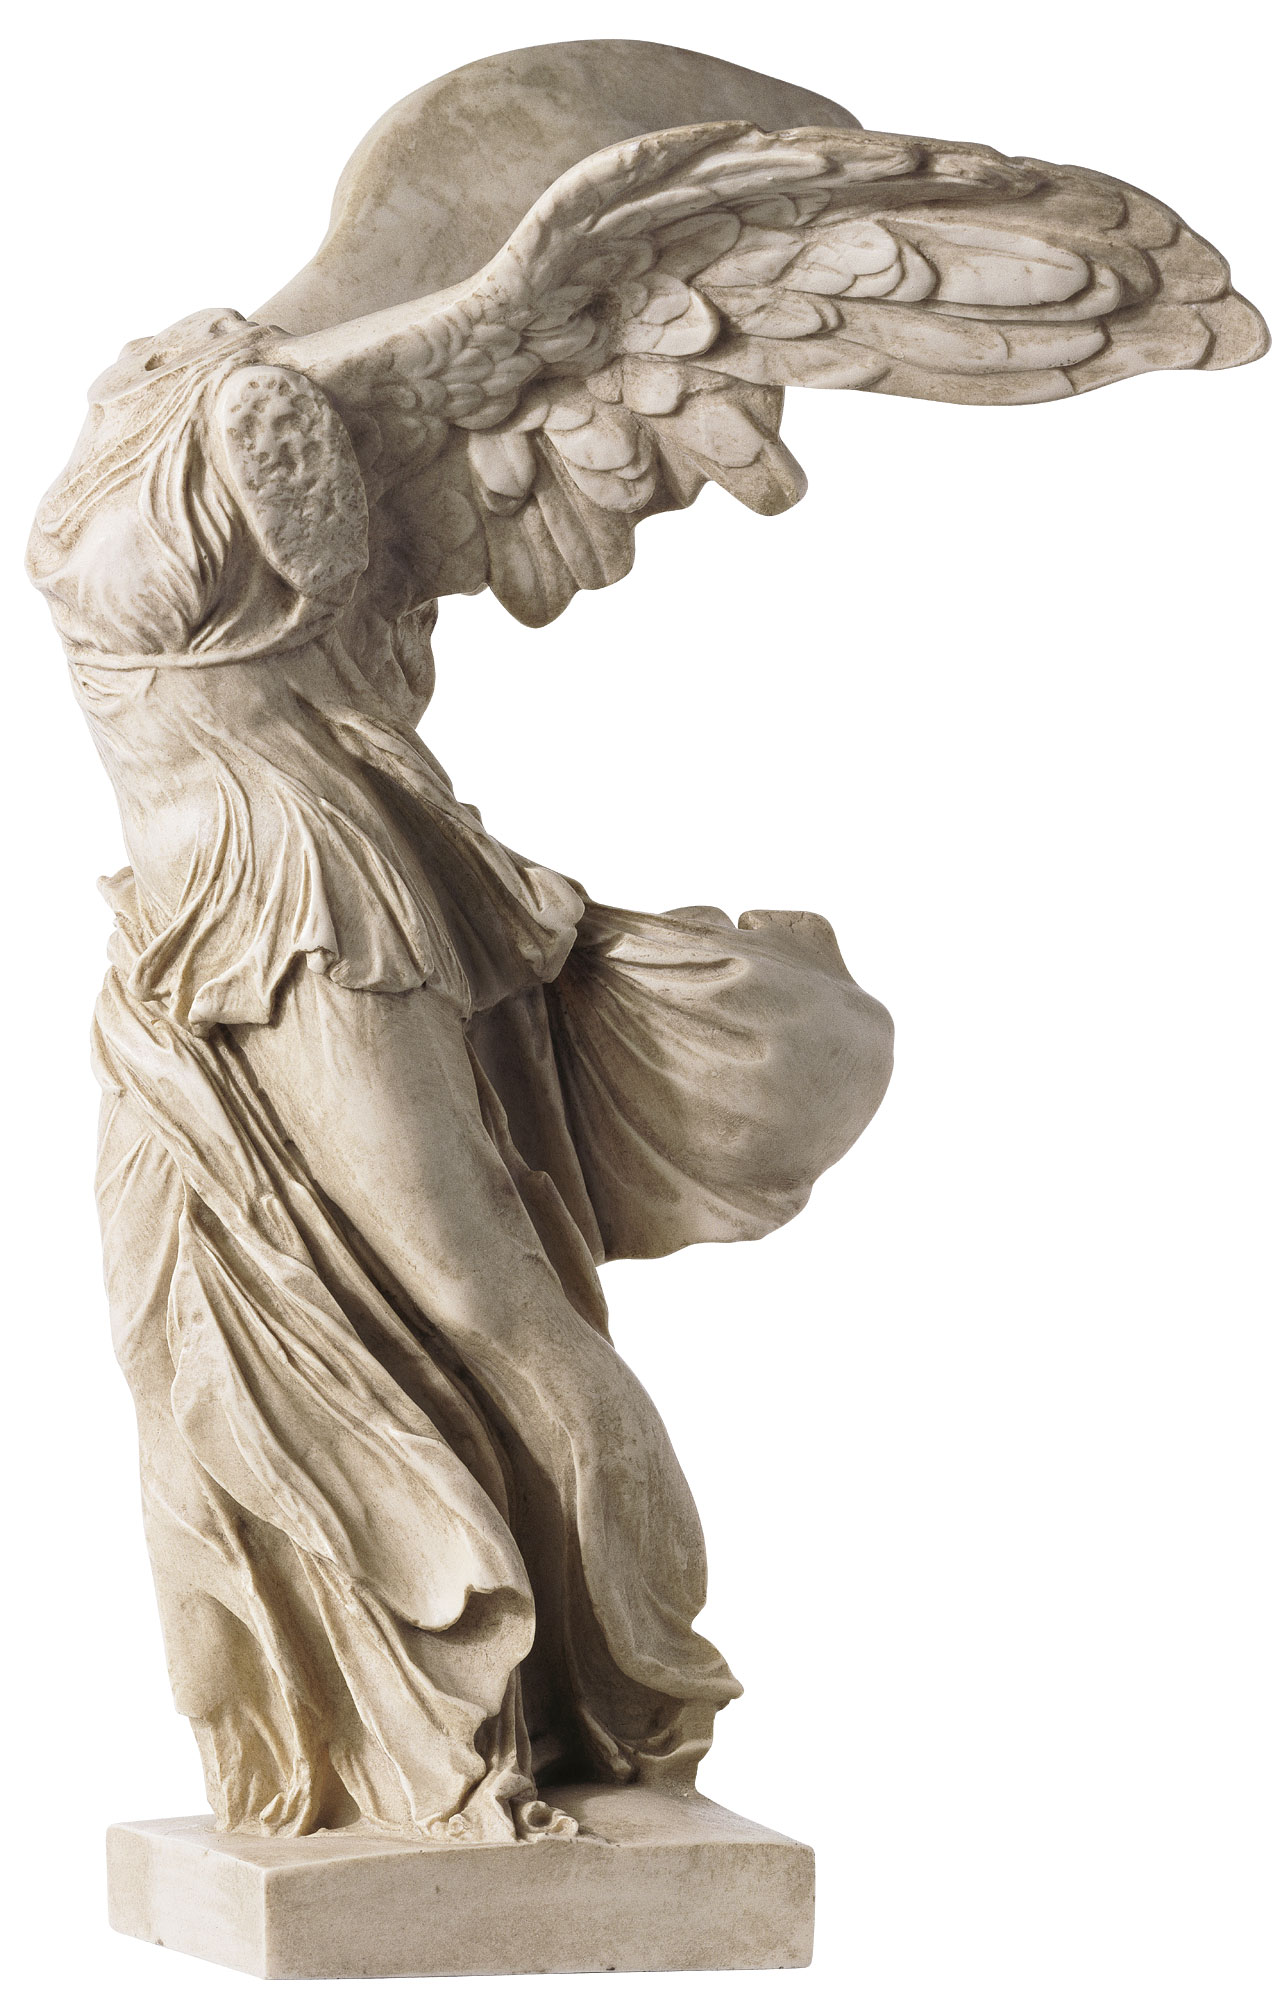 Skulptur 'Nike von Samothrake' (33 cm), Kunstguss